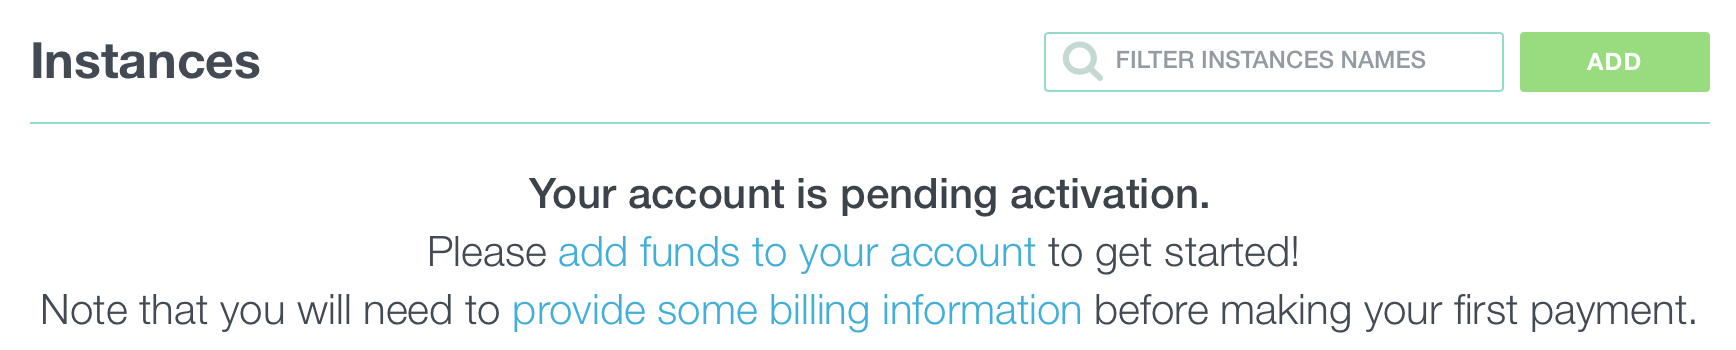 Account pending validation